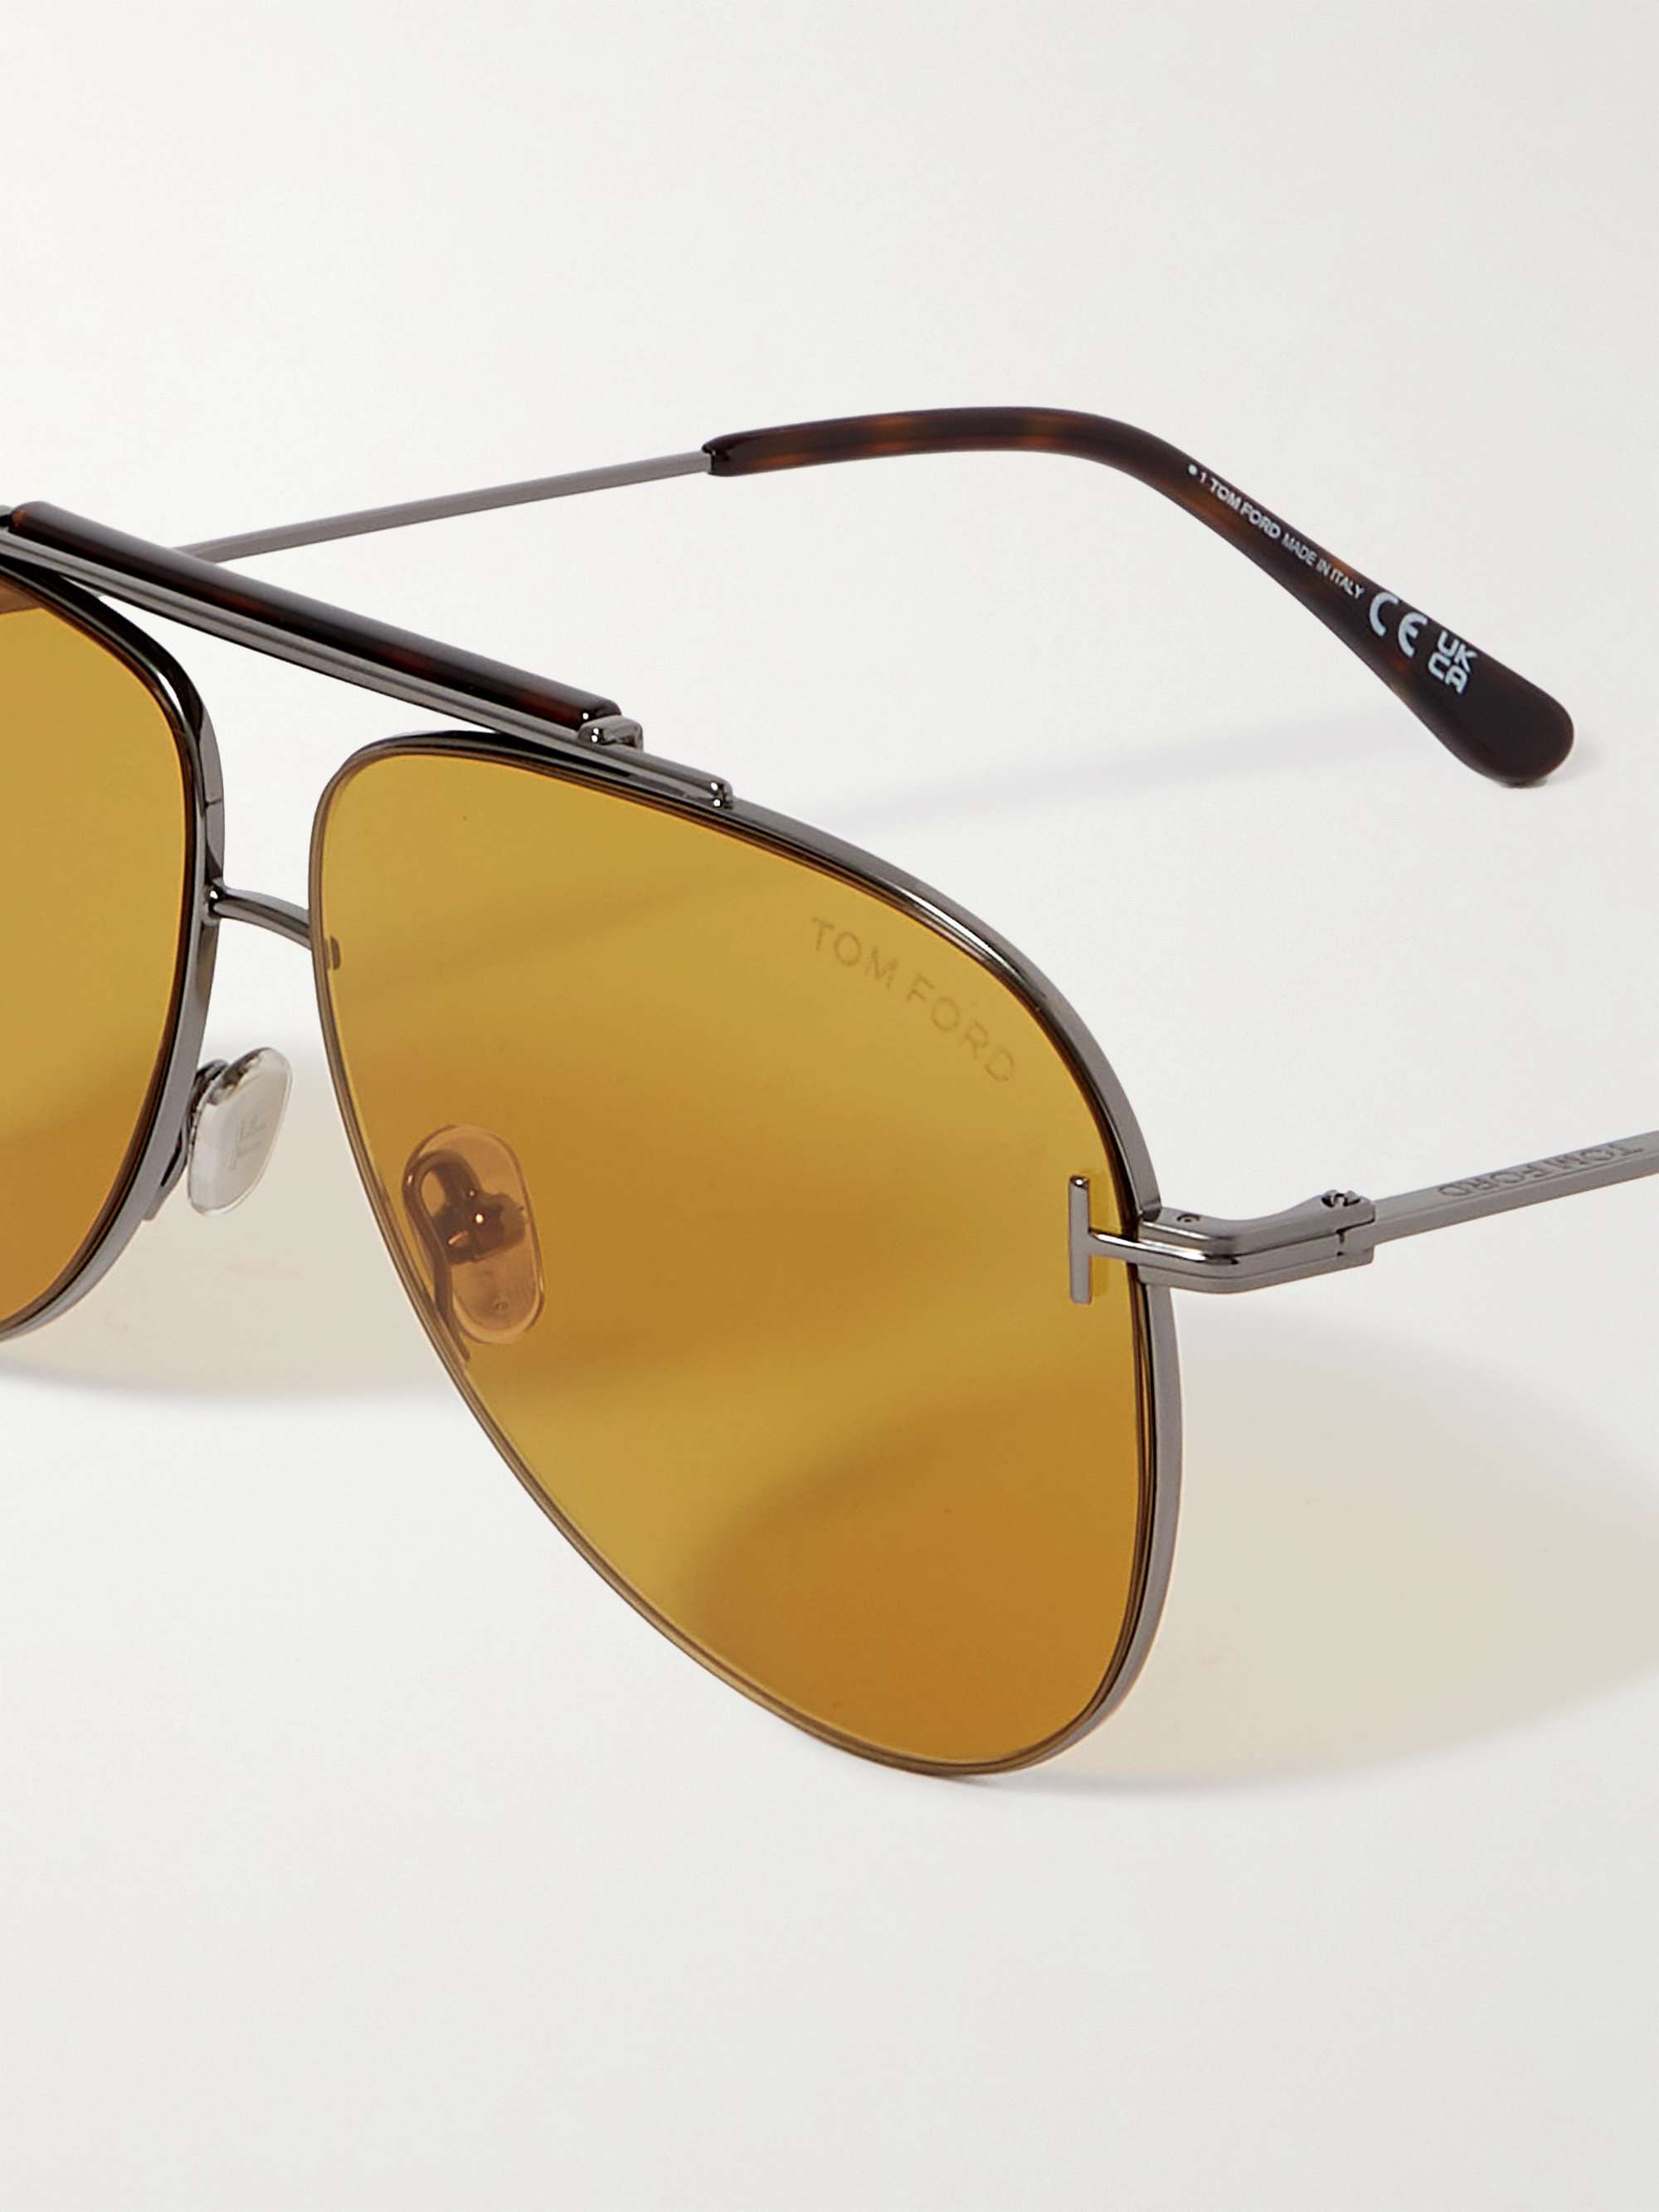 TOM FORD Aviator-Style Silver-Tone and Tortoiseshell Acetate Sunglasses